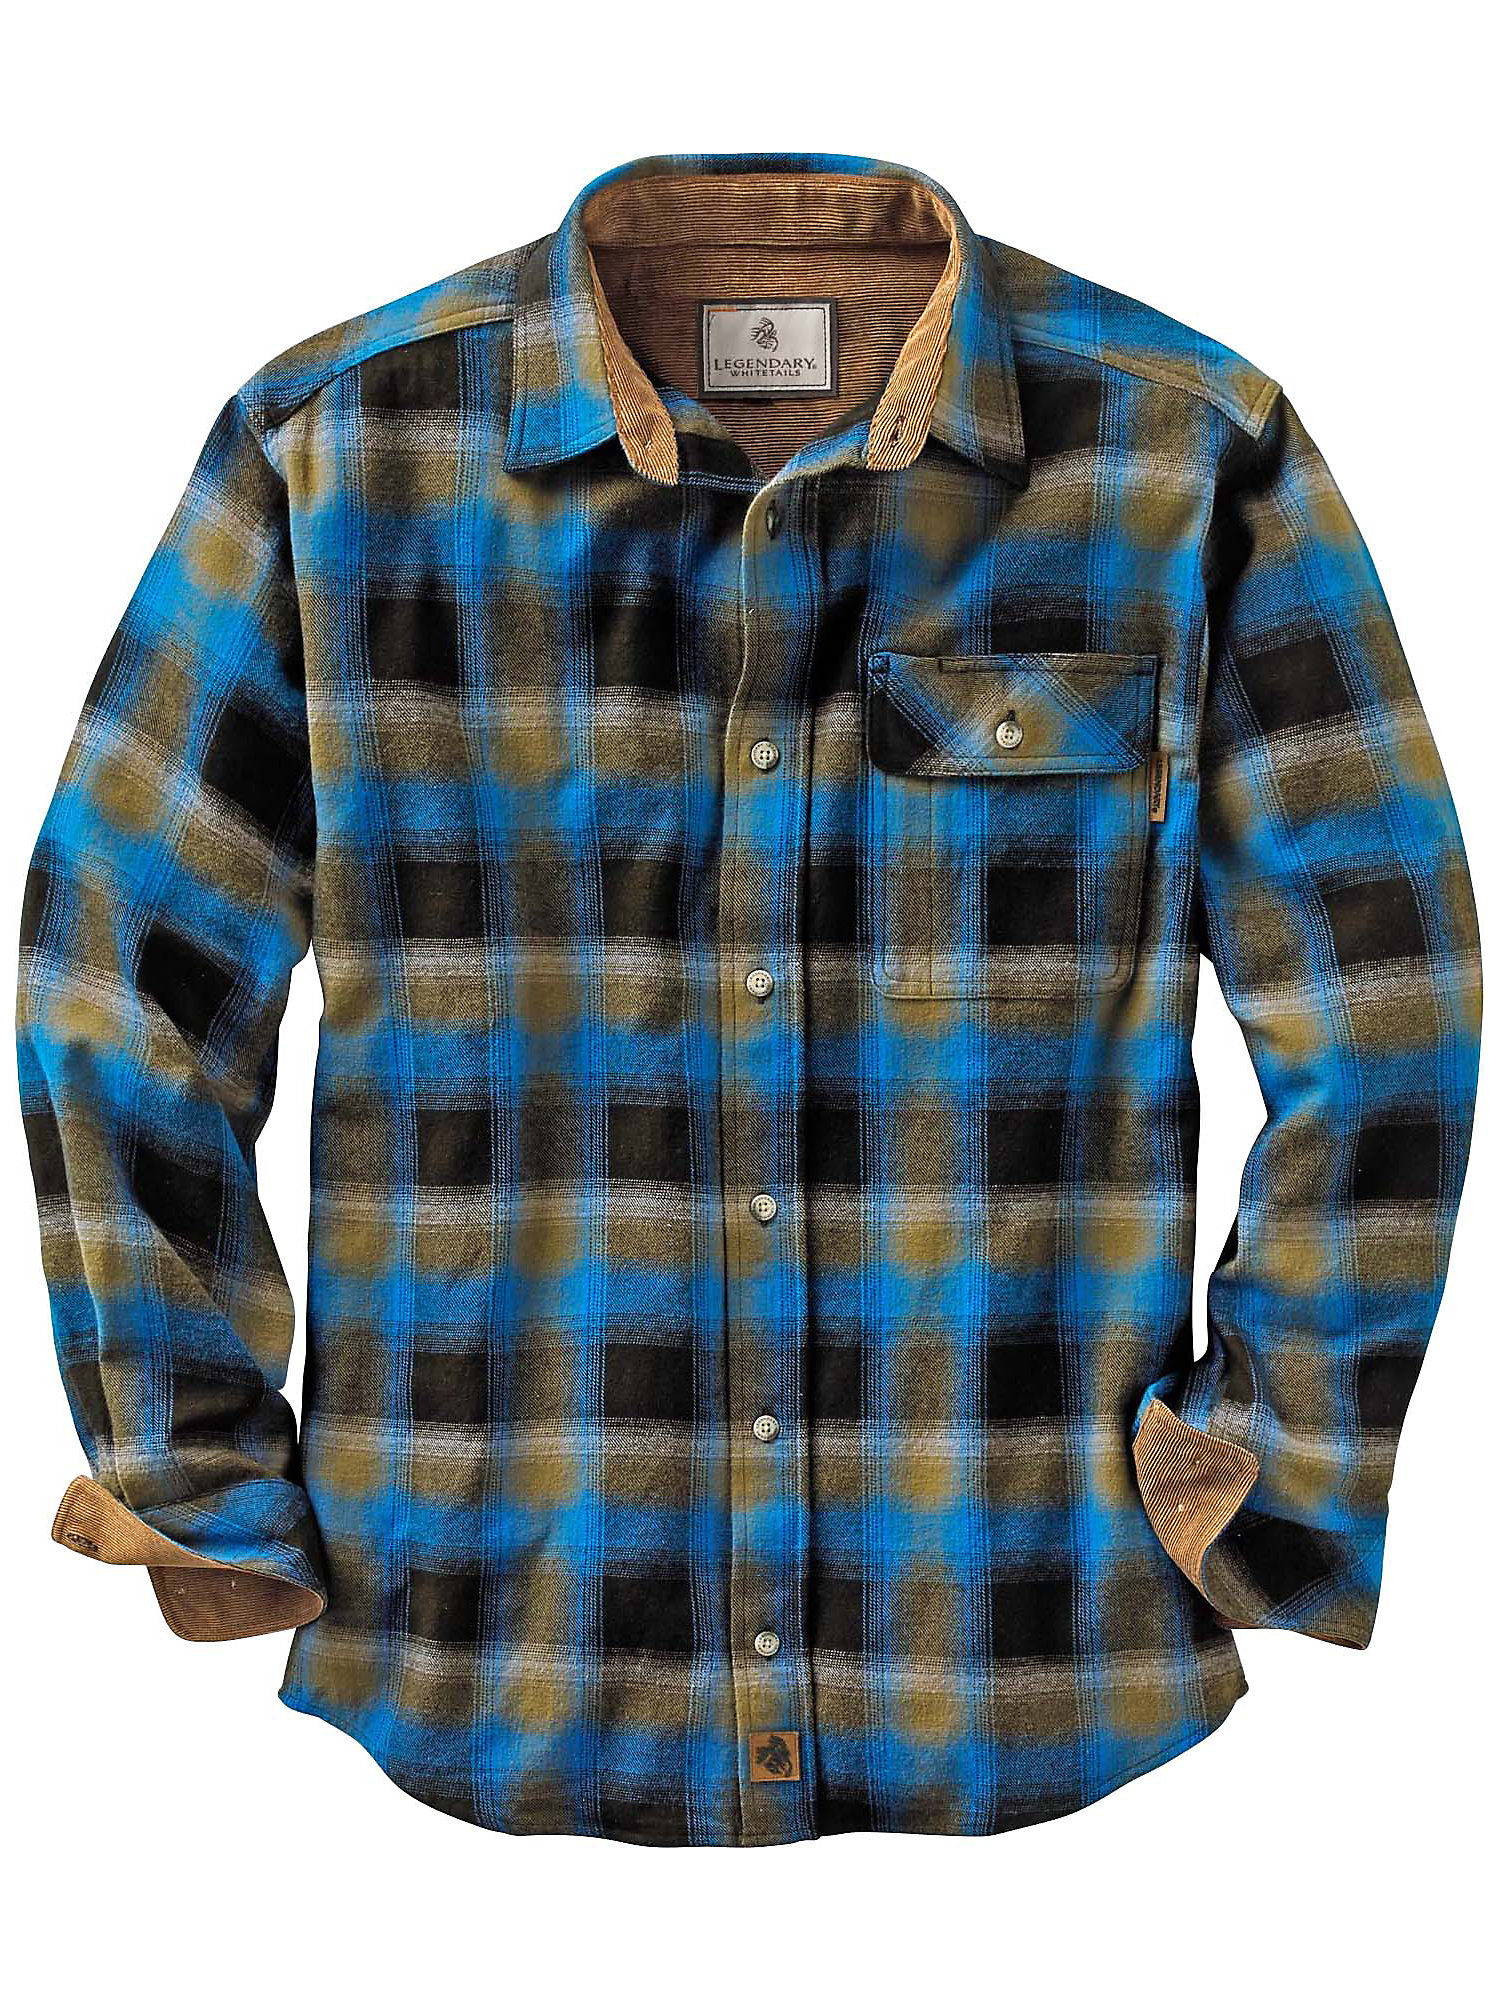 Legendary Whitetails Men's Buck Camp Flannel Shirt - image 1 of 2